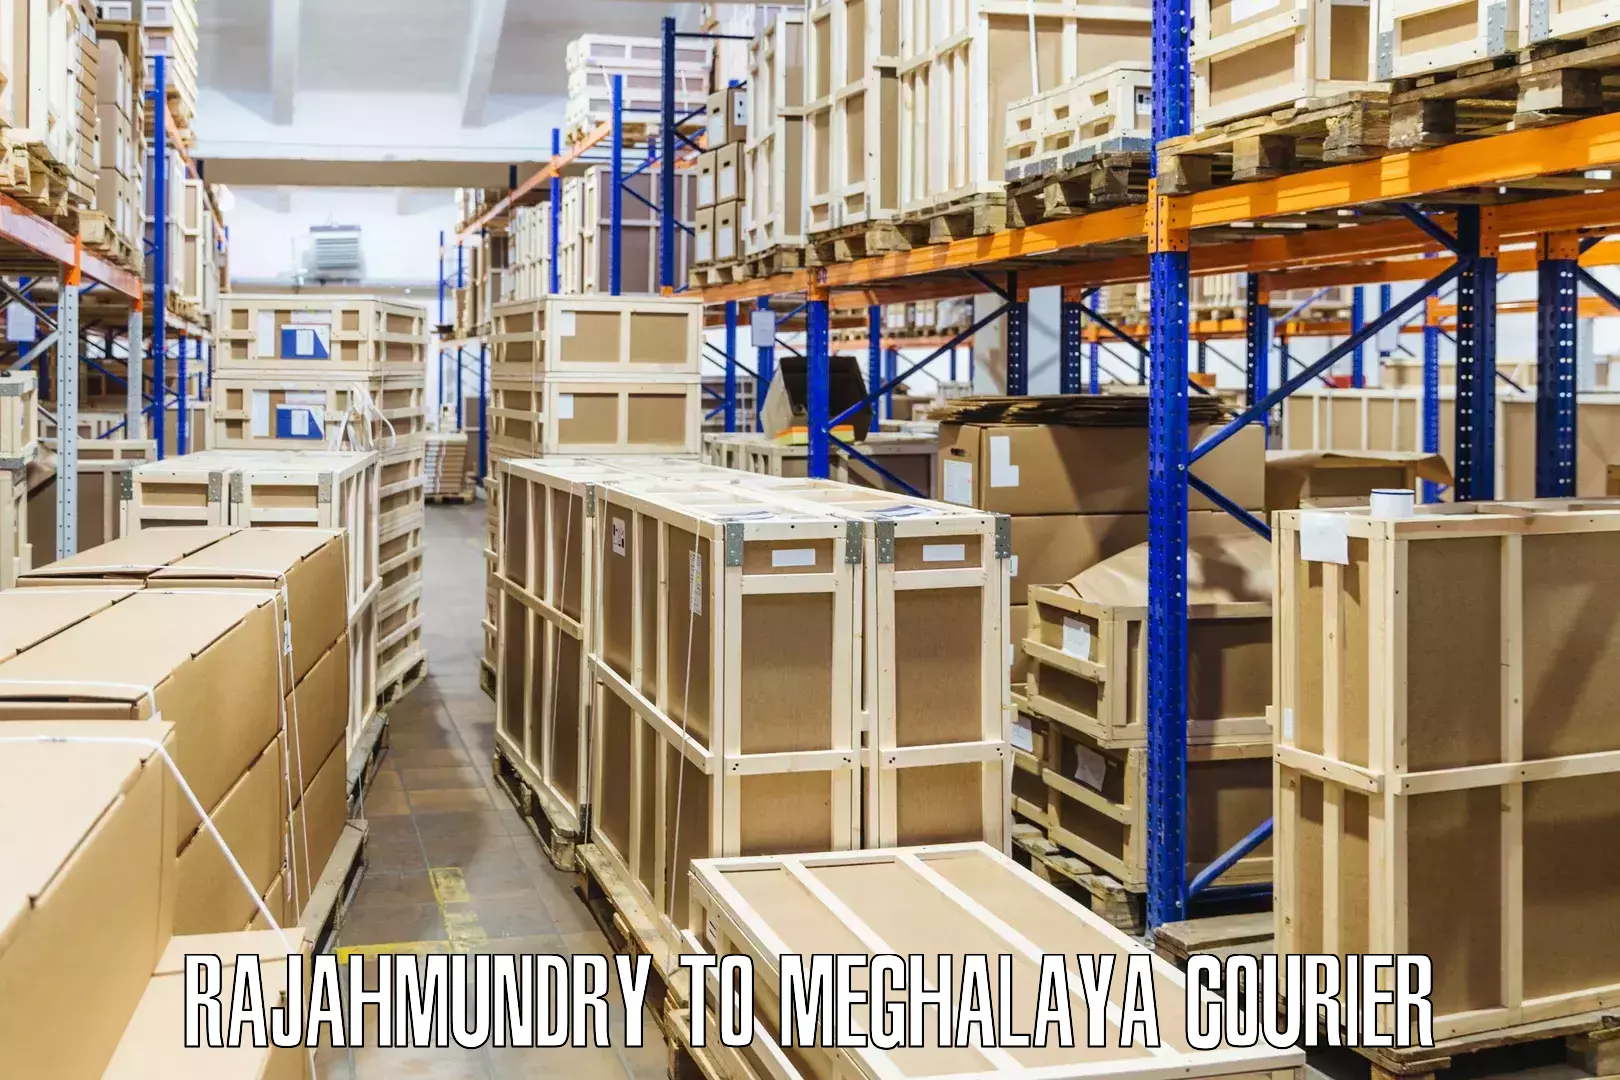 Advanced shipping network Rajahmundry to Meghalaya